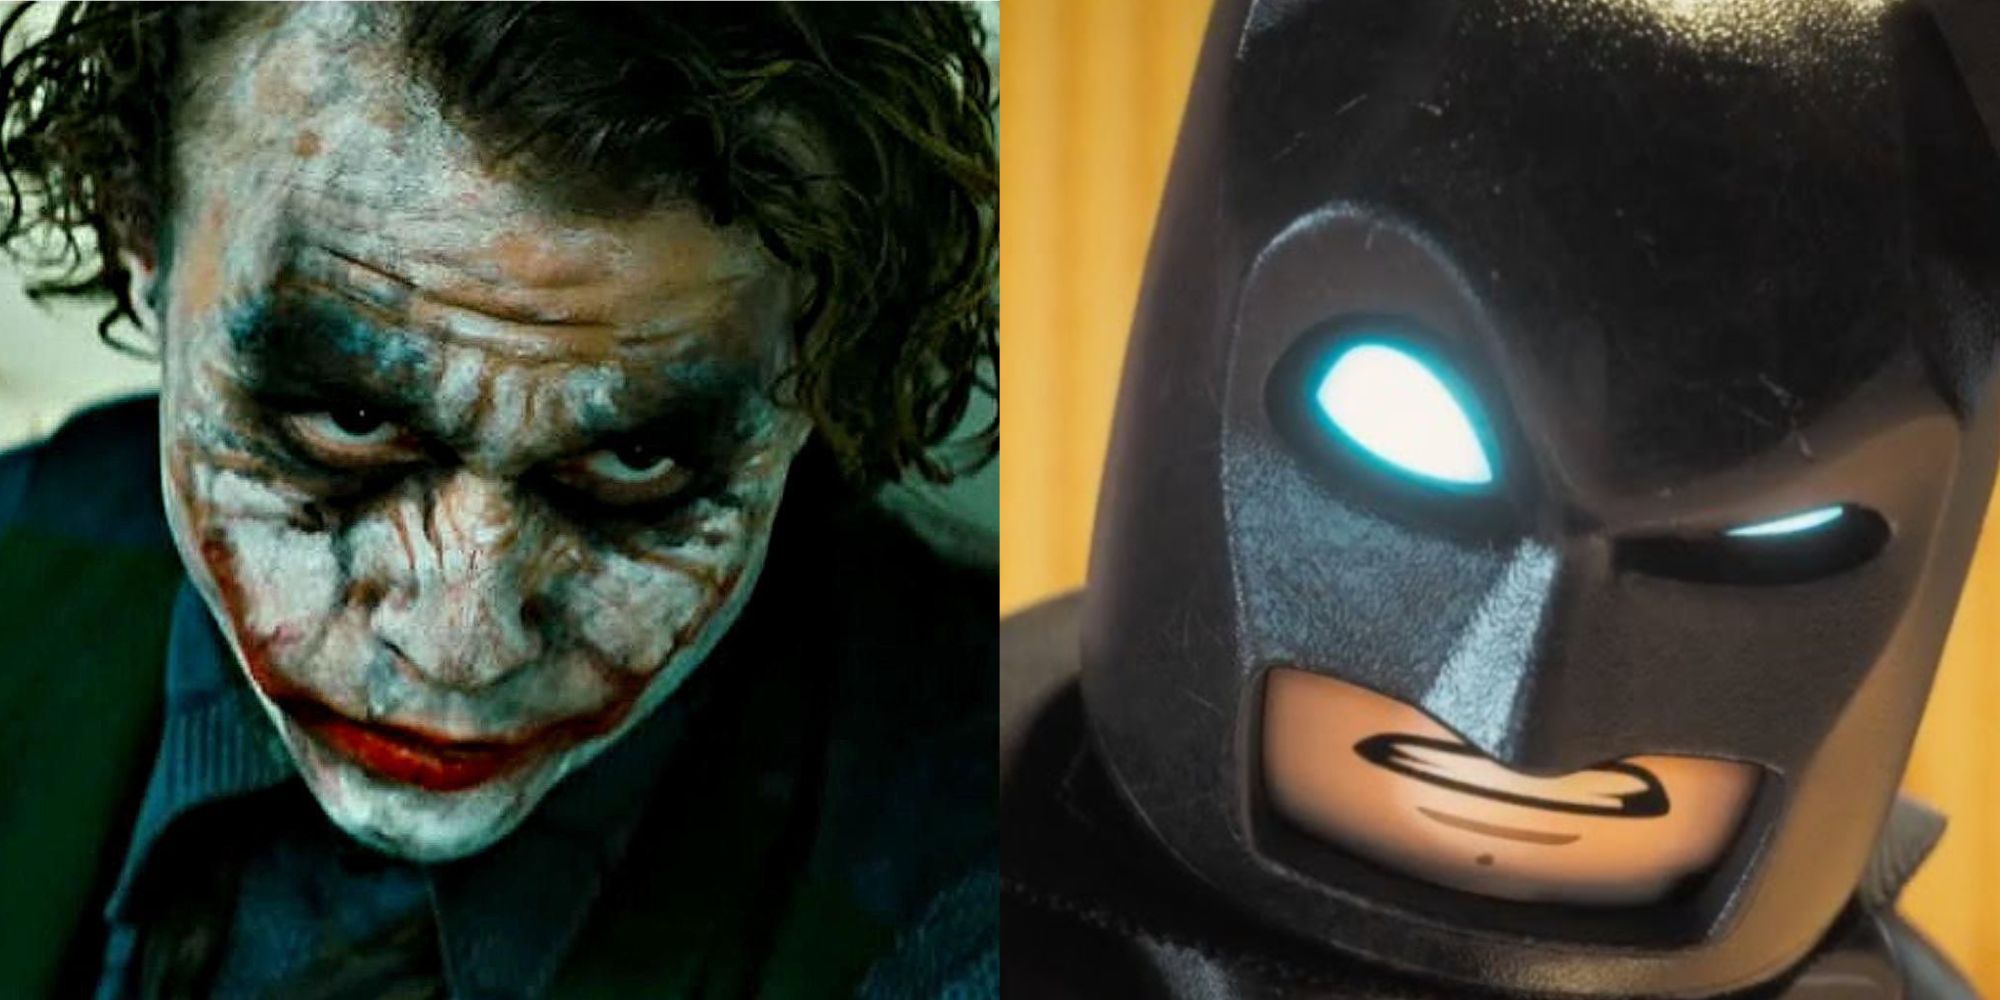 The Joker and Lego Batman from Batman movies.